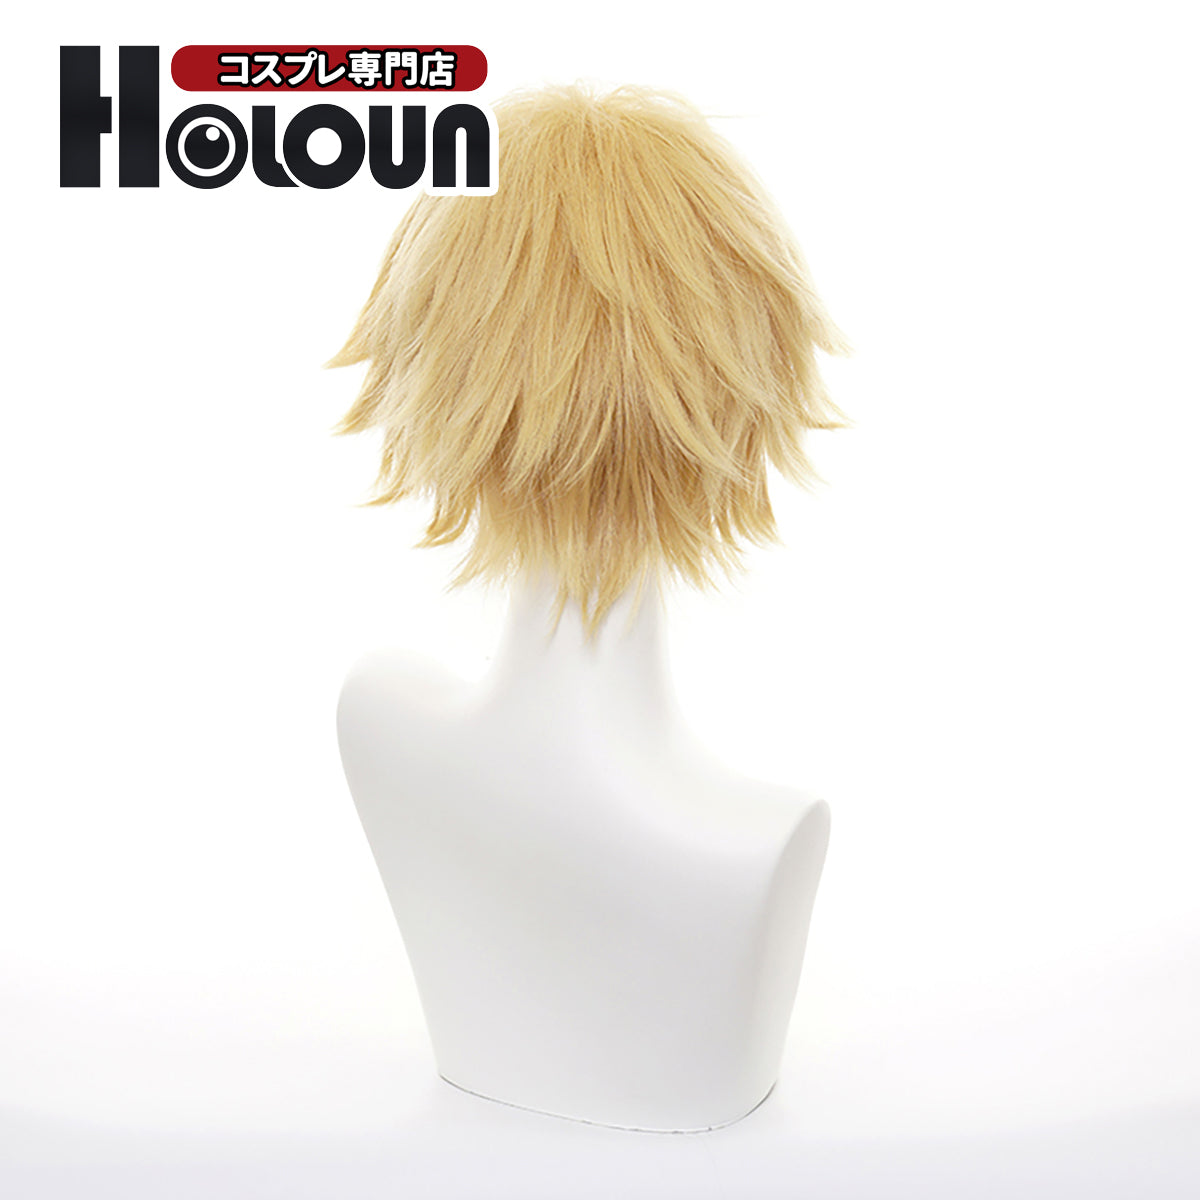 HOLOUN Anime Cosplay Universal Wig For Chainsaw Denji Fake Hair Headwear Halloween Christmas Party Gift New